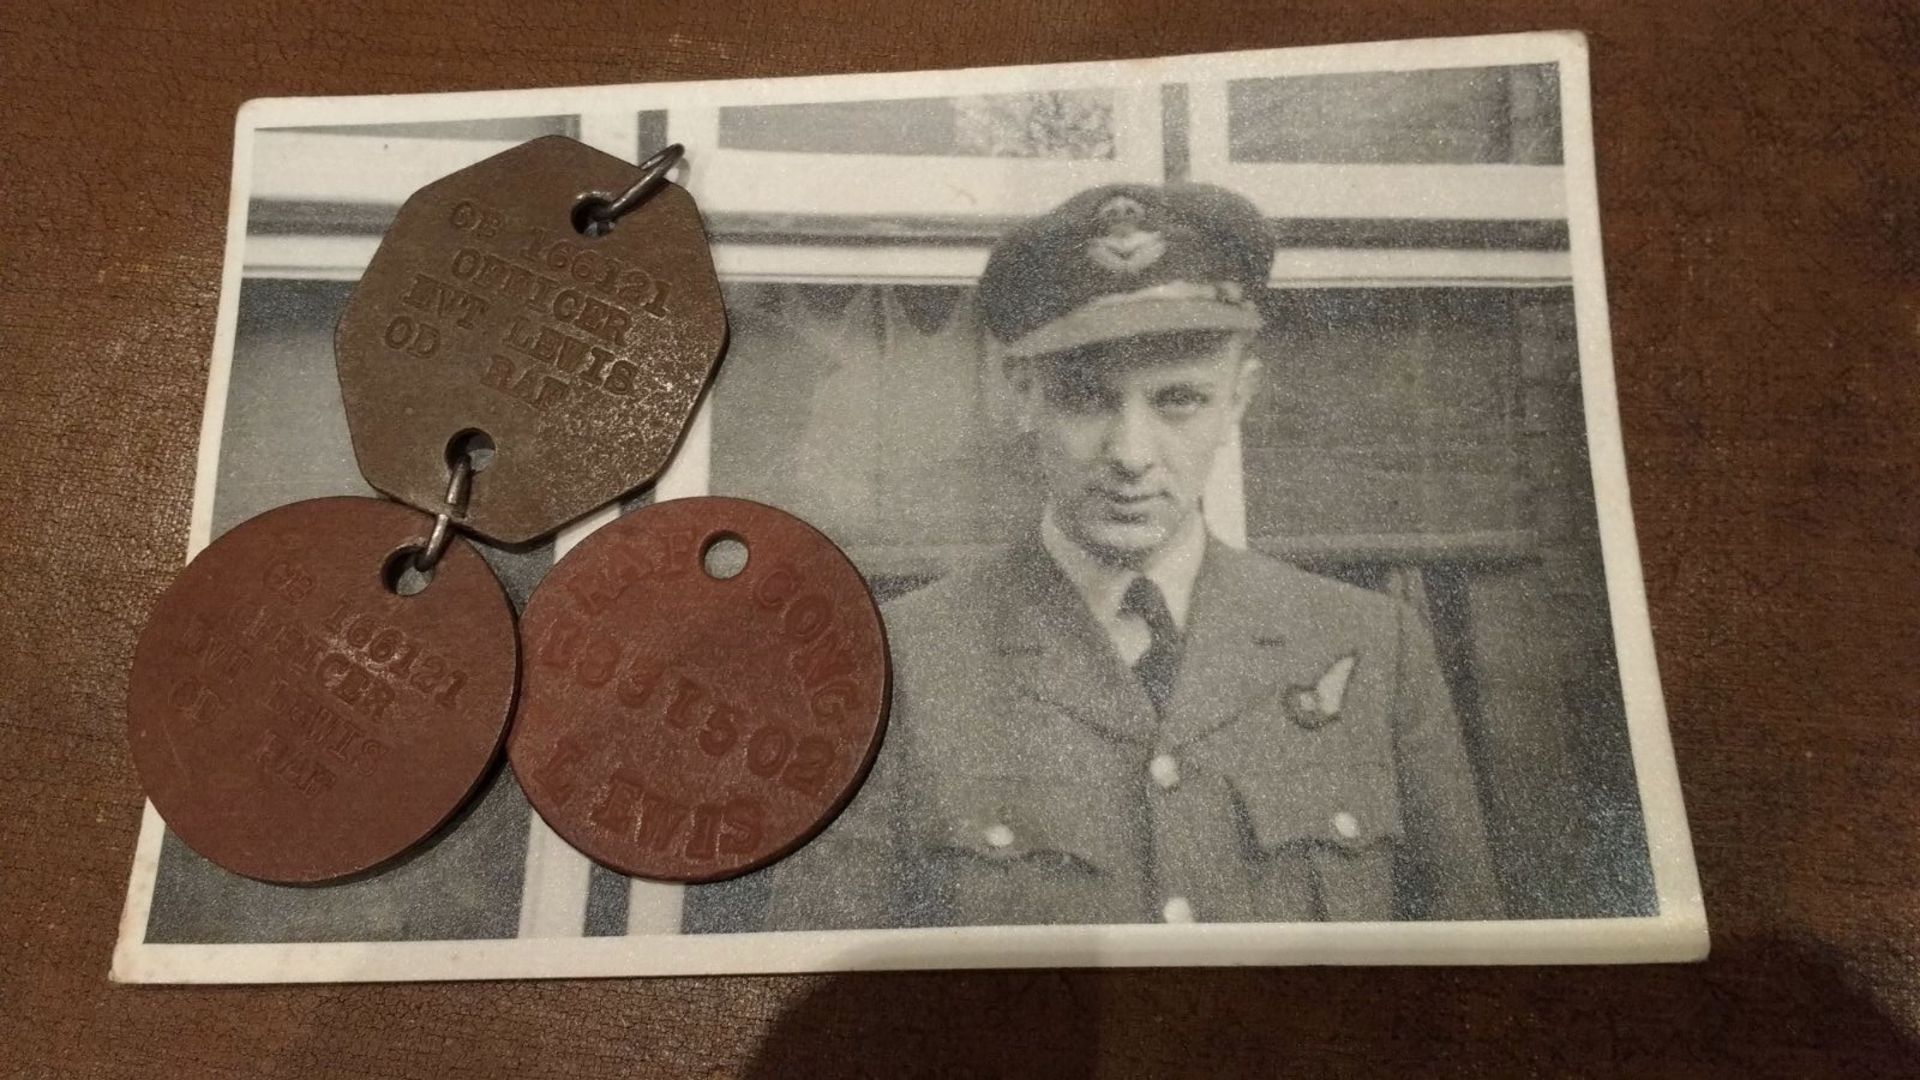 WW2 Spitfire Pilot's Gun Camera And Memorabilia (Multiple Images 1 of 31) - Image 30 of 31